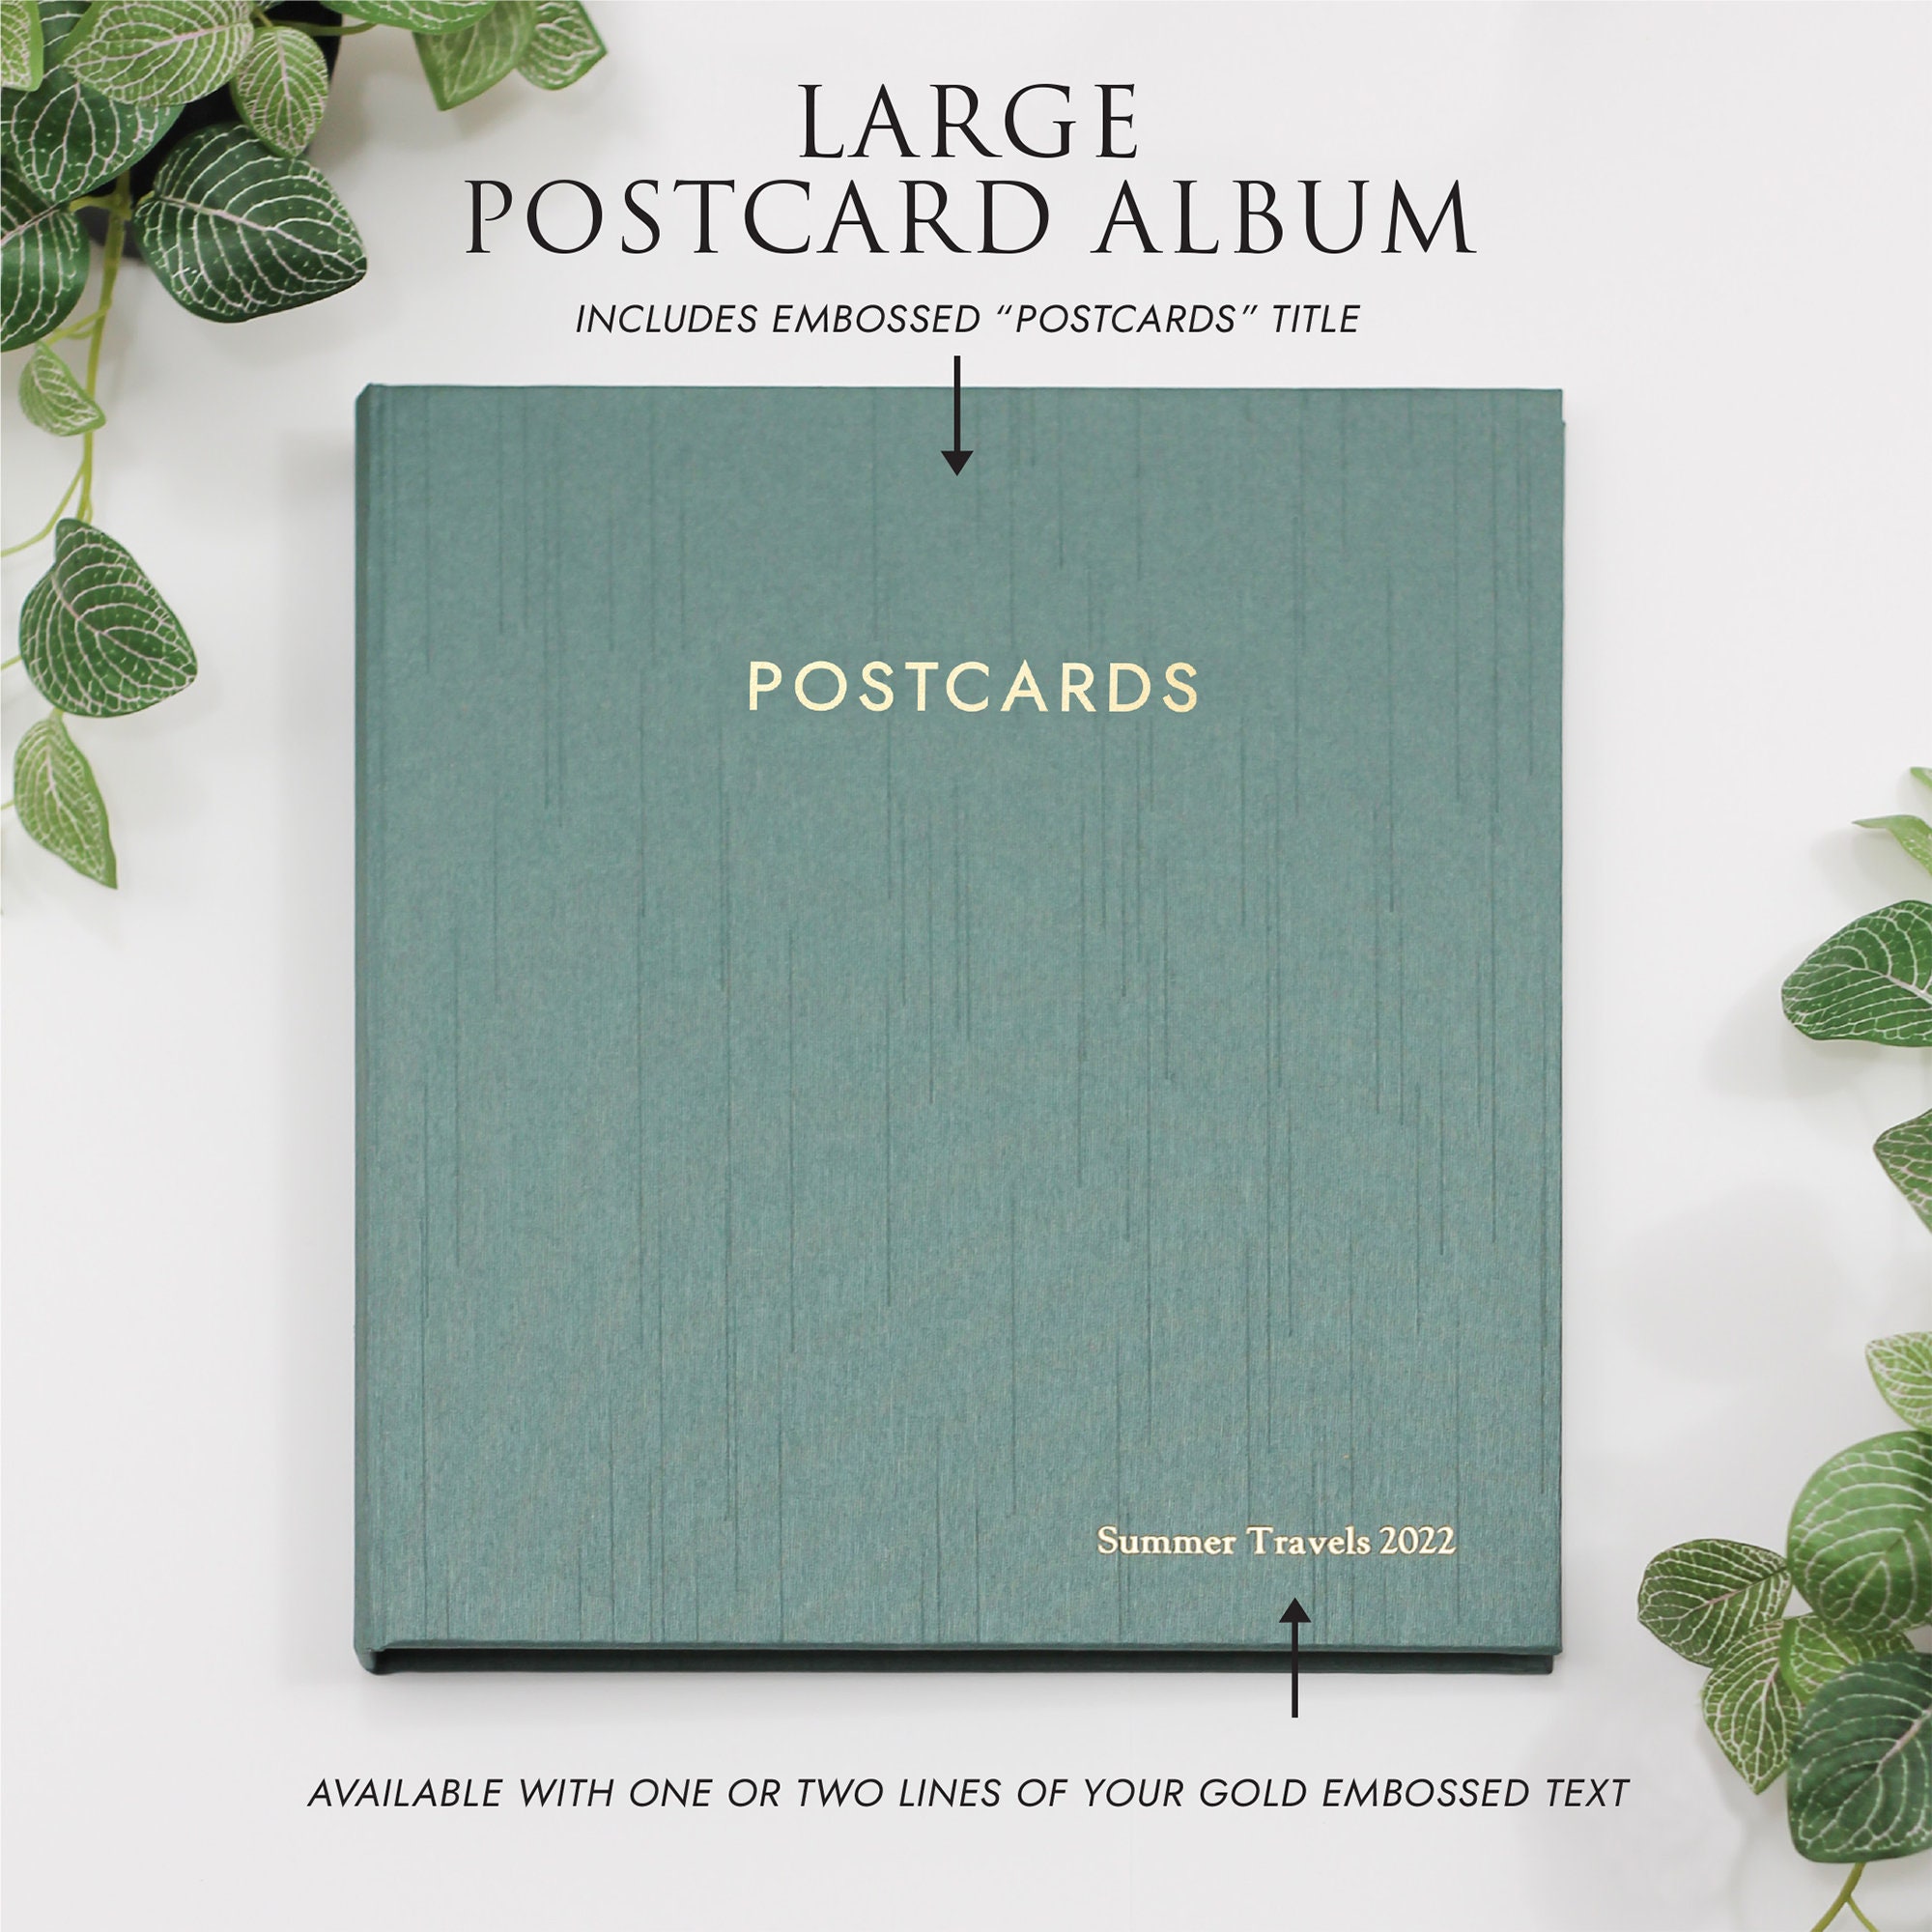 Medium Postcard Album With Natural Linen Cover 2 Postcards per